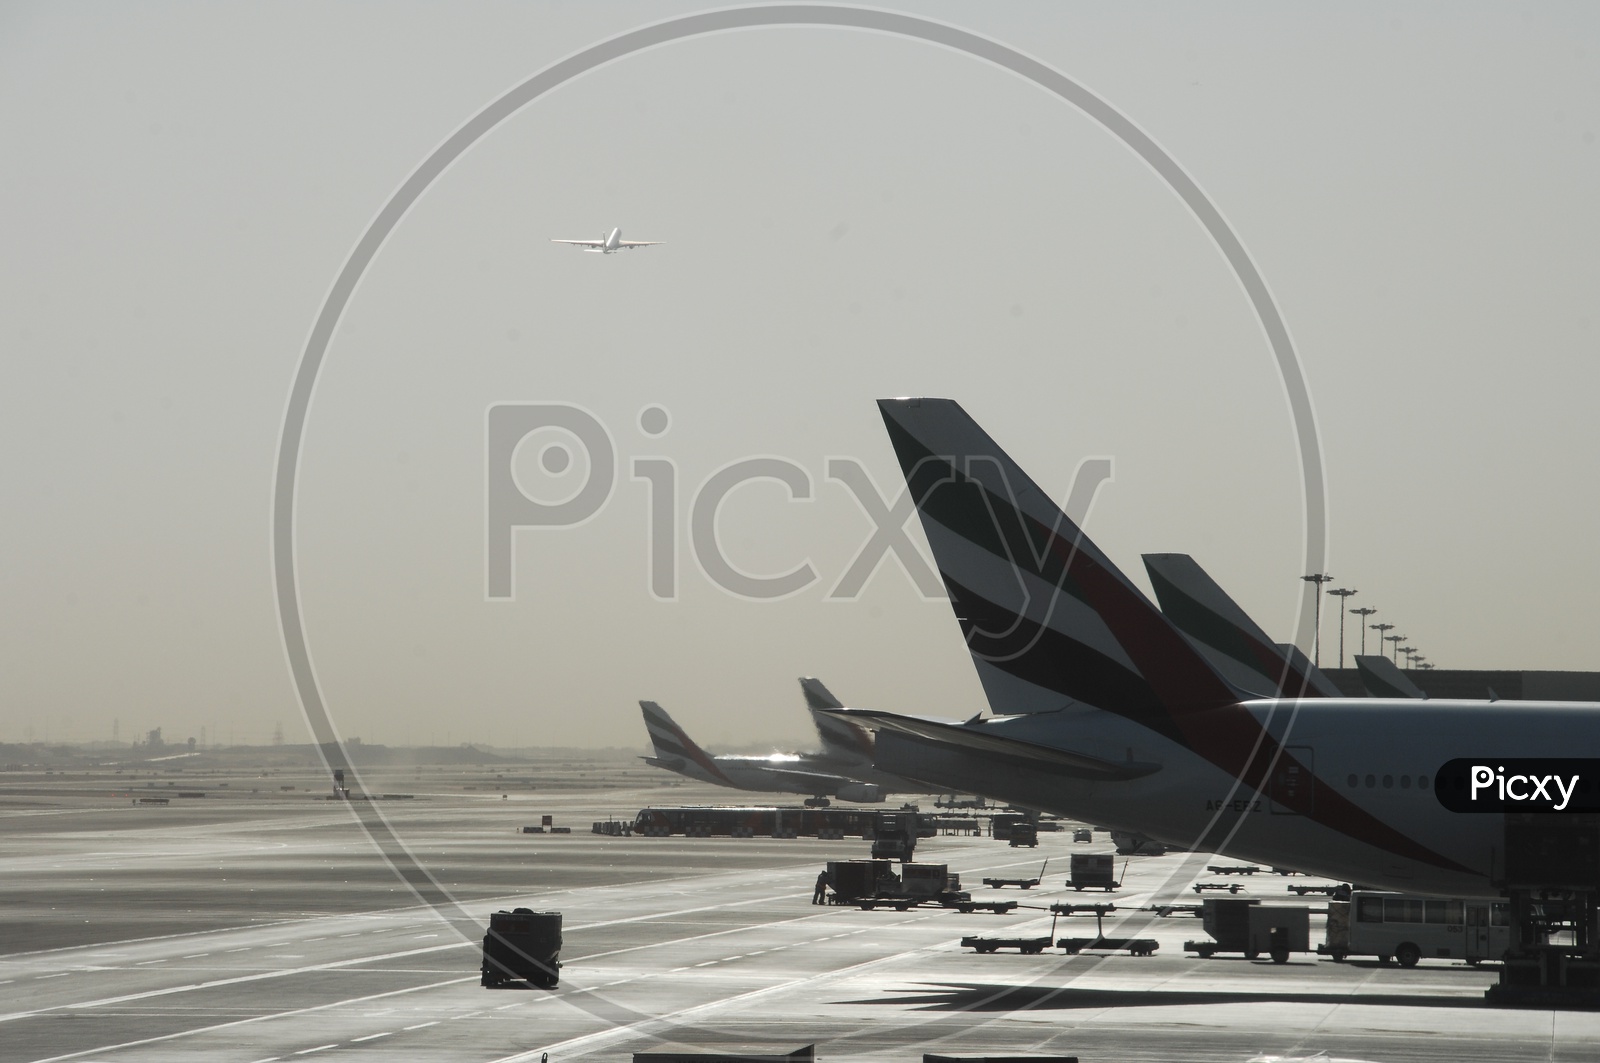 Emirates flight waiting on Runway